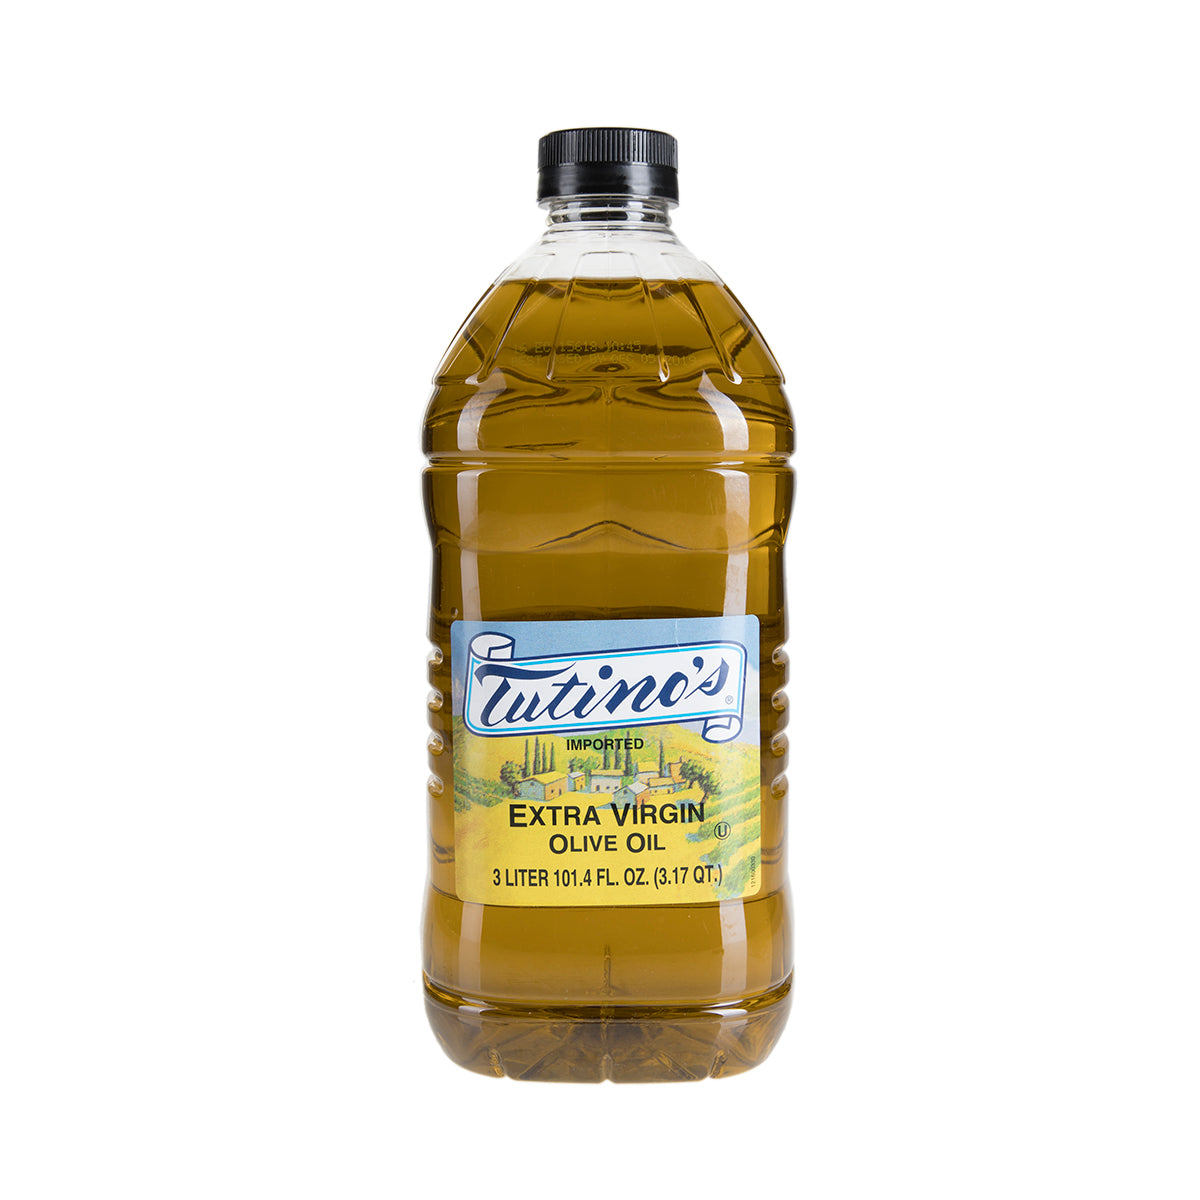 Sovena Tutino's Extra Virgin Olive Oil